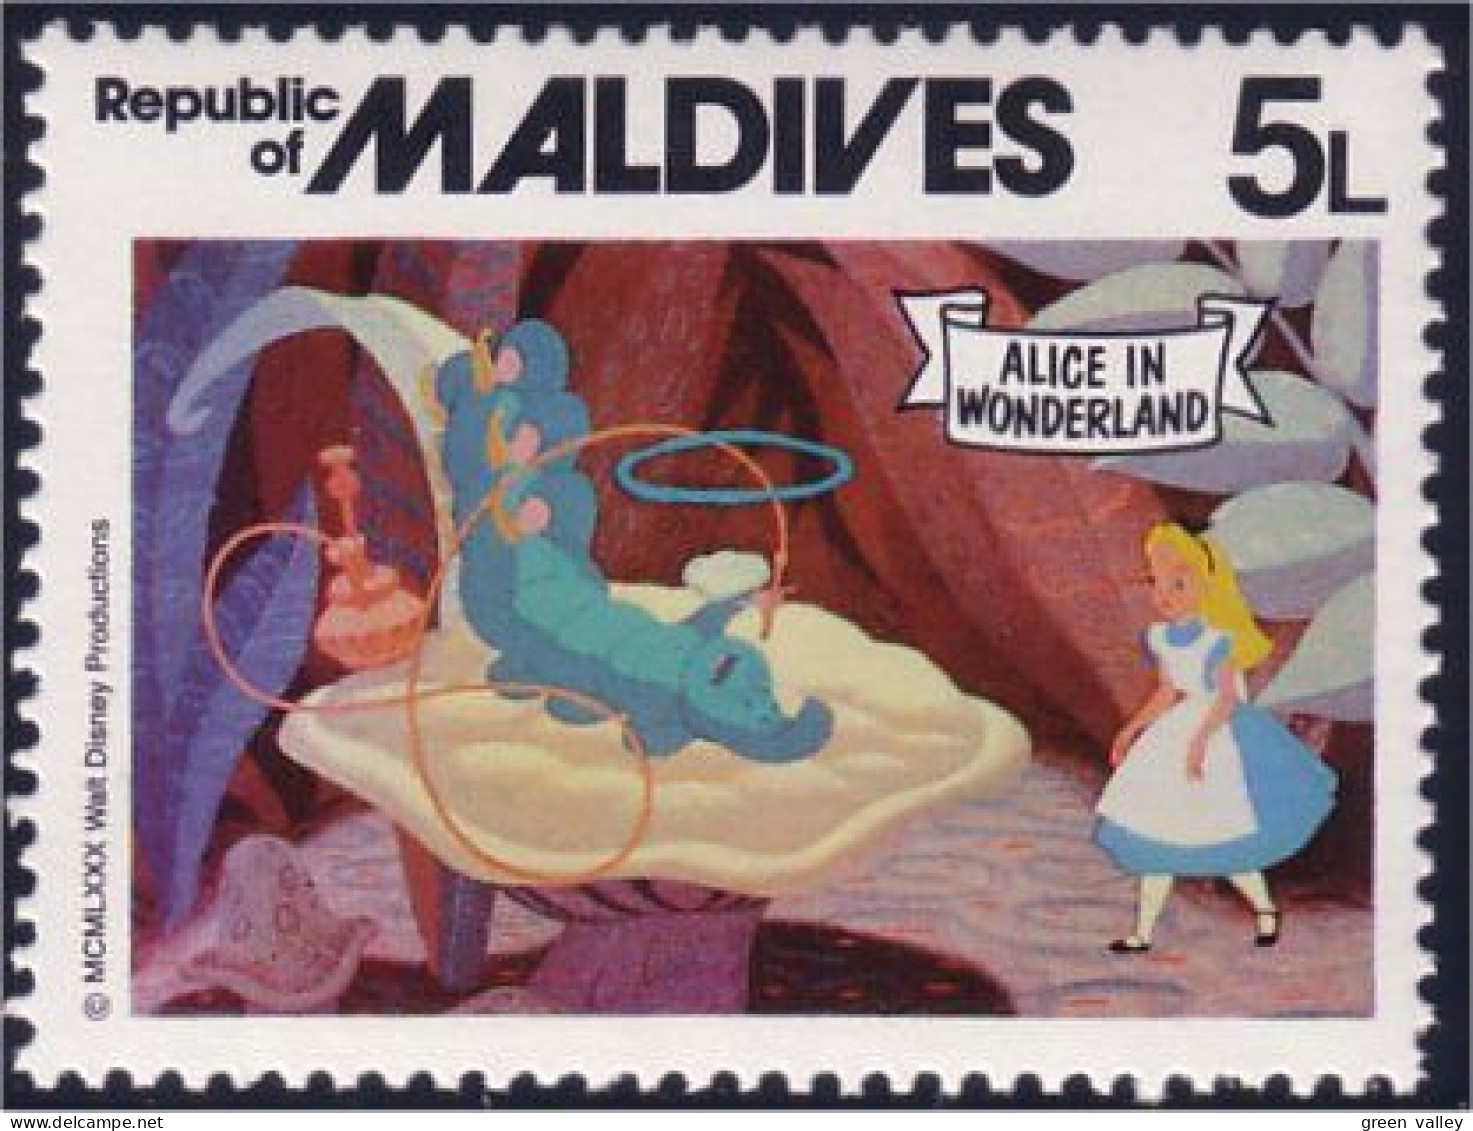 612 Iles Maldives Disney Alice Insecte Parfum Perfume Insect MNH ** Neuf SC (MLD-43a) - Maldives (1965-...)